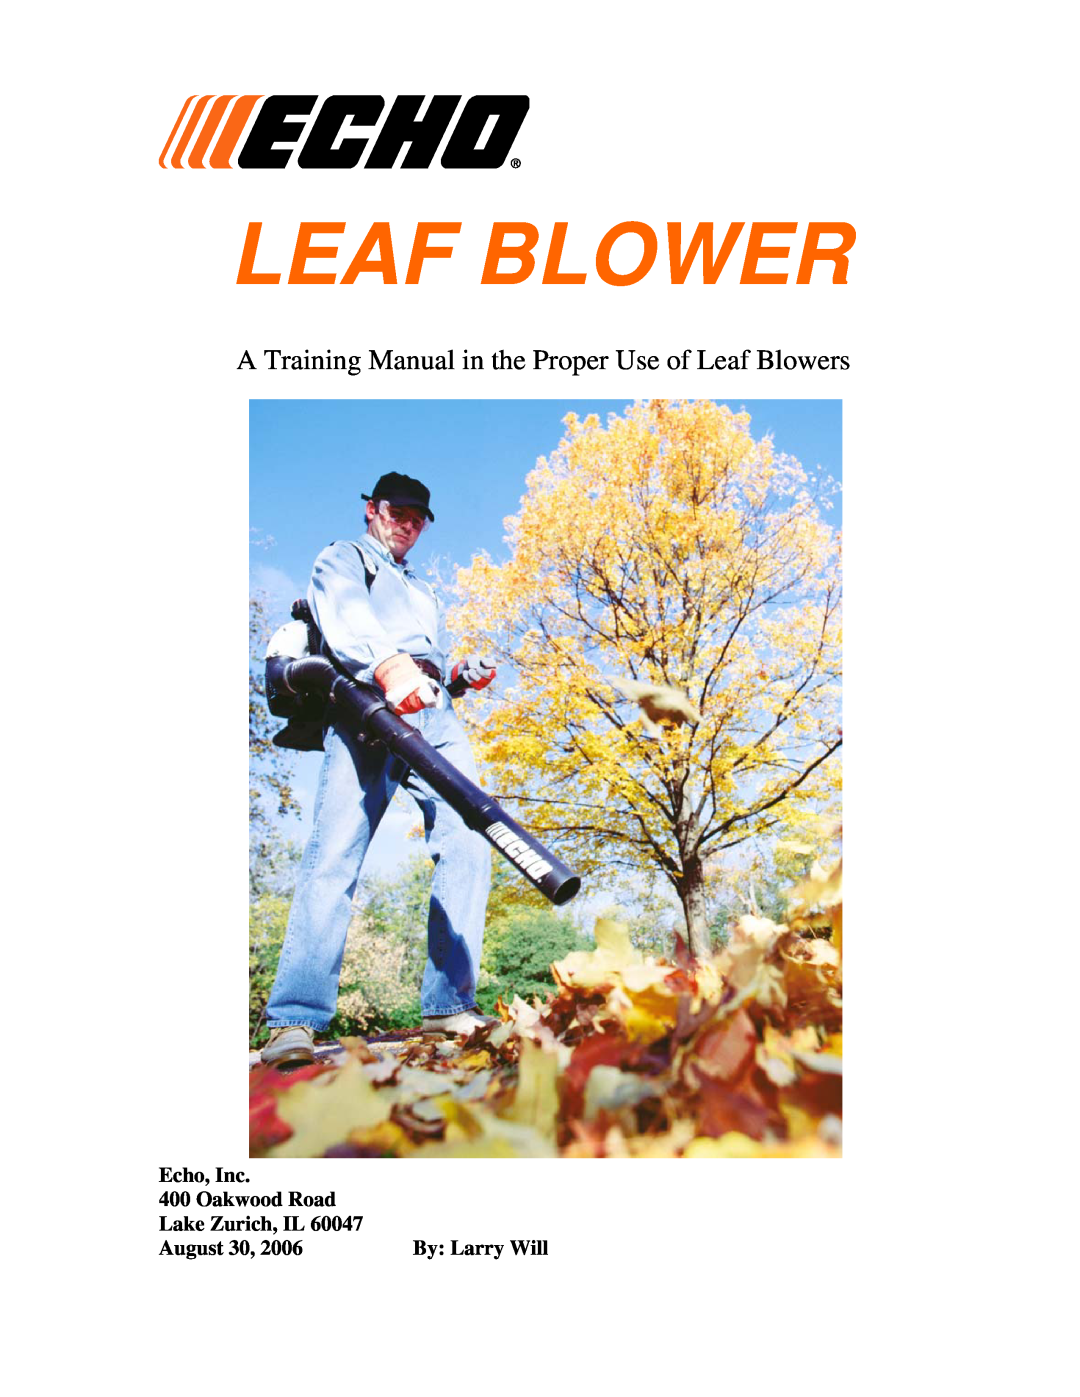 Echo LEAF BLOWER manual Leaf Blower, Echo, Inc, Oakwood Road, Lake Zurich, IL, August 30, By: Larry Will 